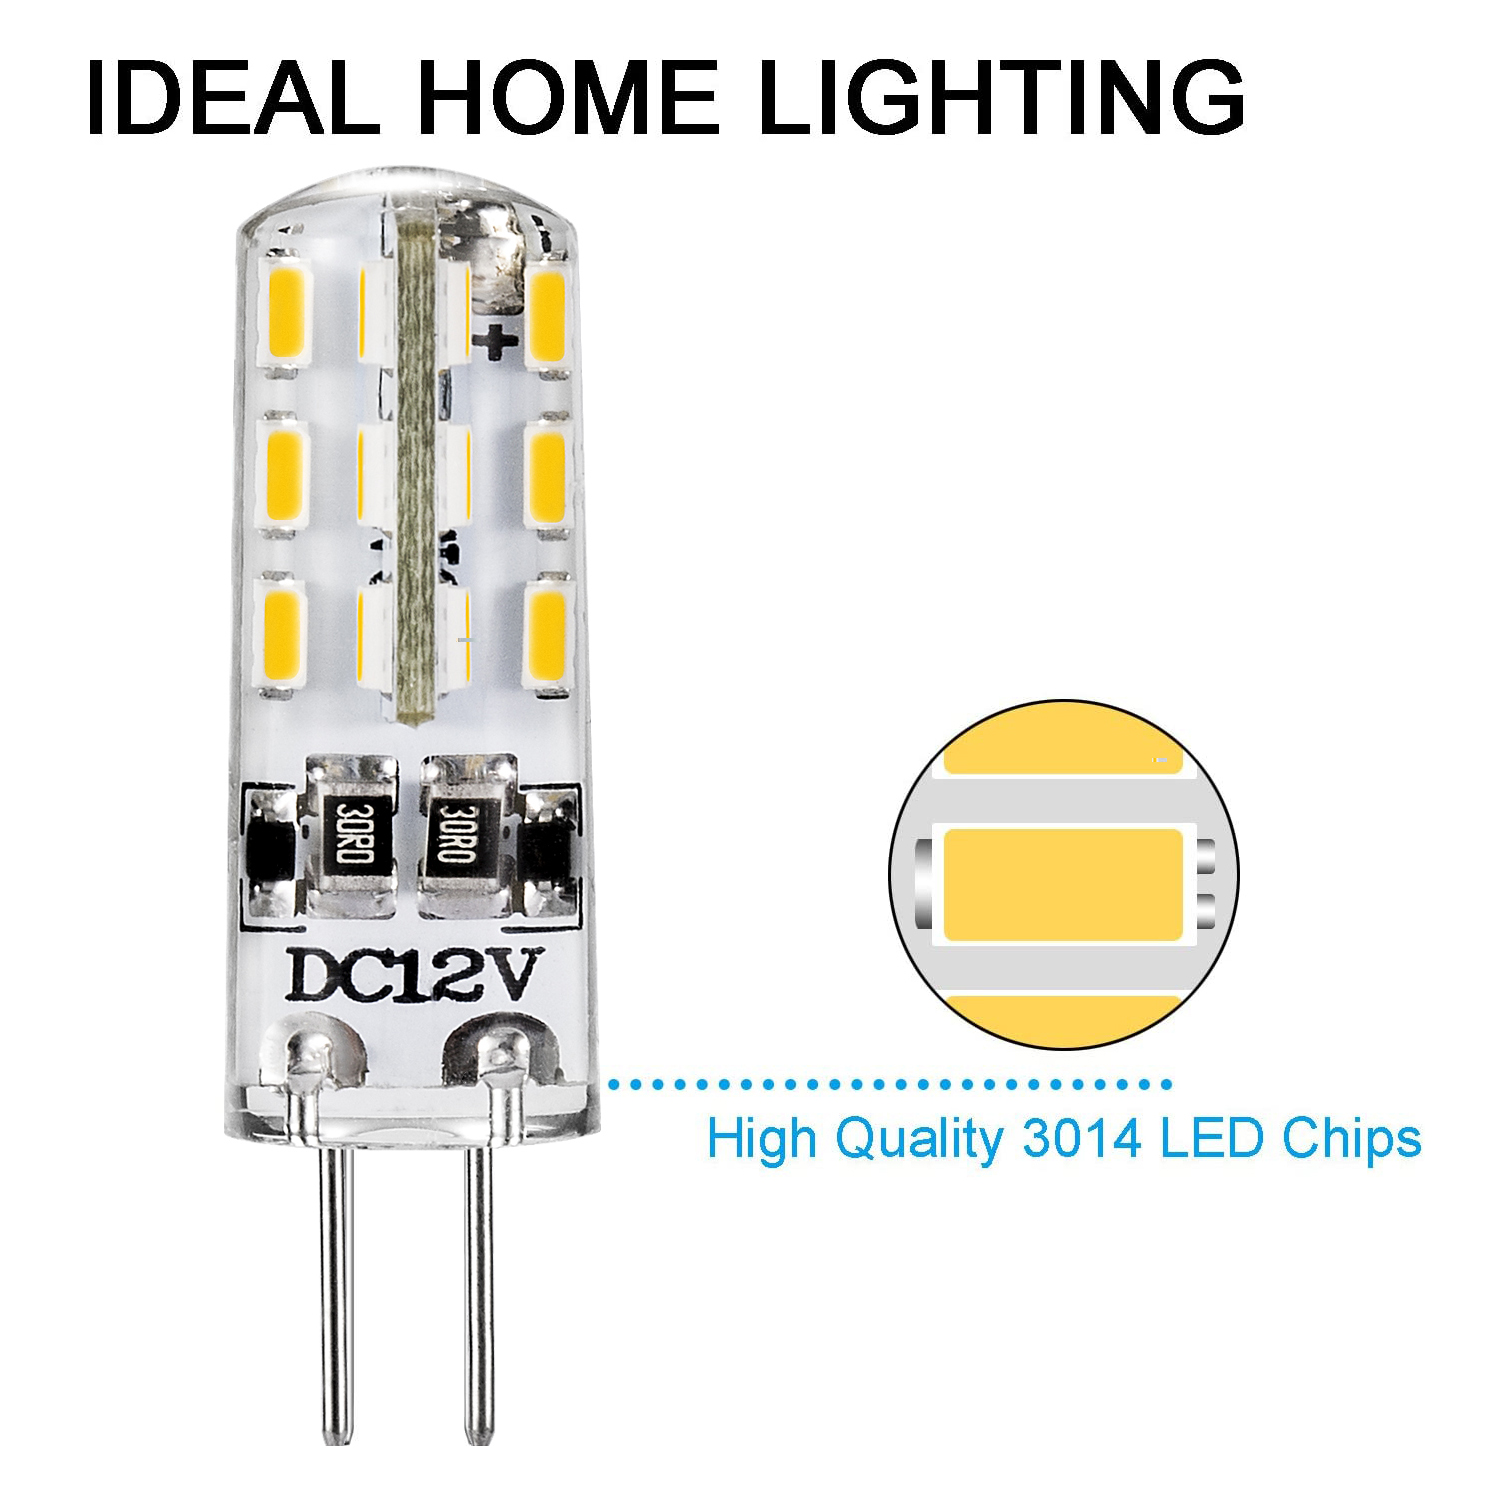 1W G4 LED Light Bulbs(8 Pack) Equivalent to 10W Halogen Bulb,DC 12V  Dimmable,6 LEDs 5050 SMD,180 Degree Beam Angle,6000K Daylight White,G4  Bi-Pin Base